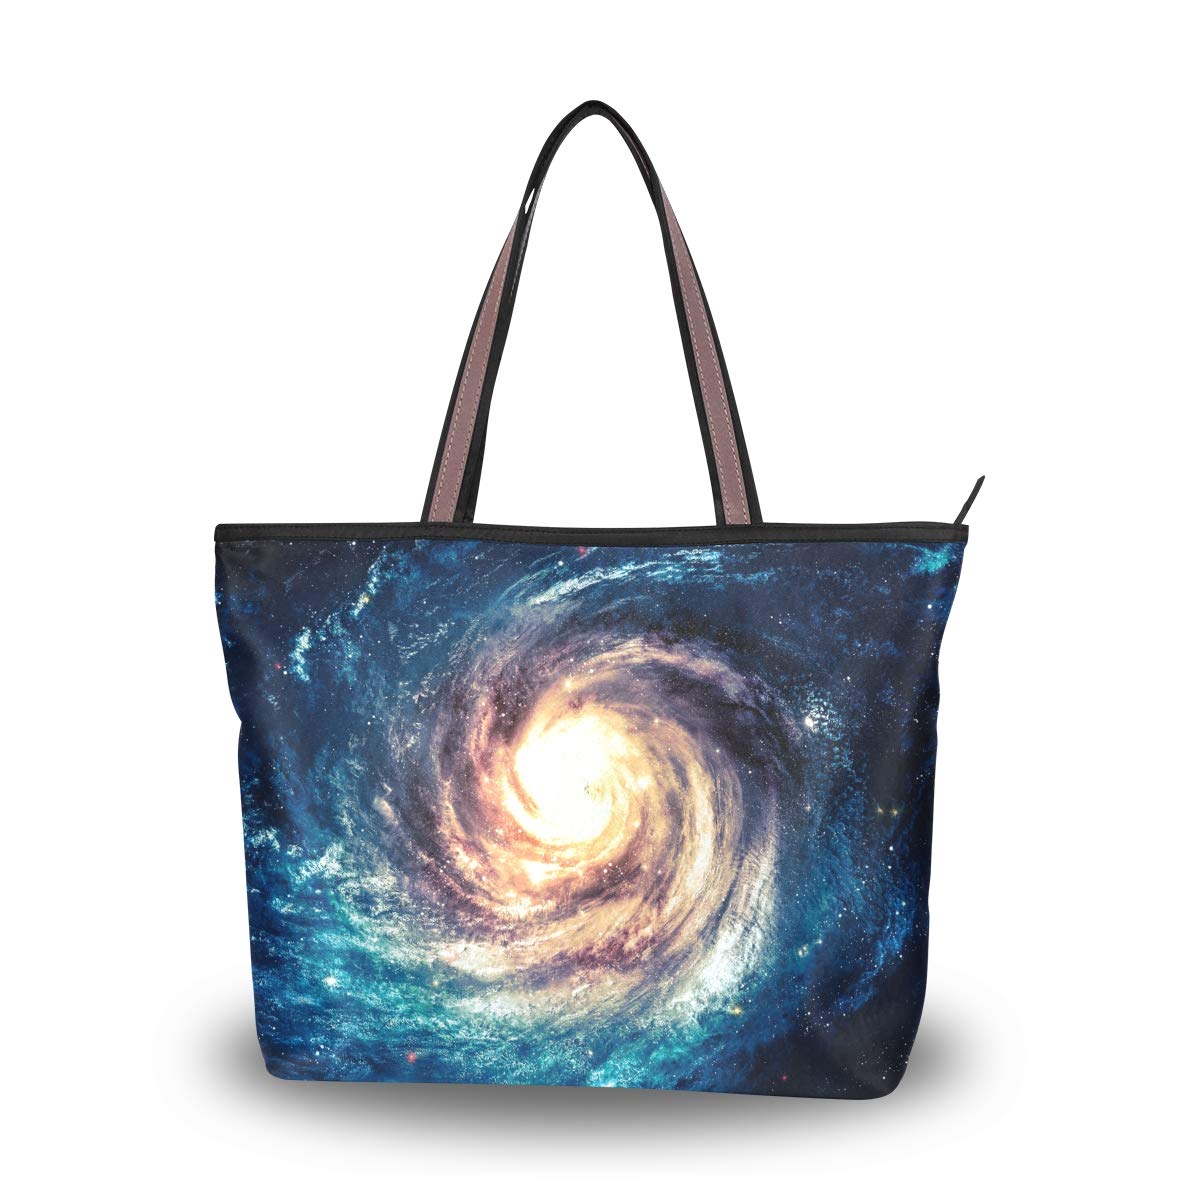 Large Women Tote Bag Galaxy Star Nebula Handbags Tote Handle with Zipper Shoulder Bag Grocery Shopping Work Bag